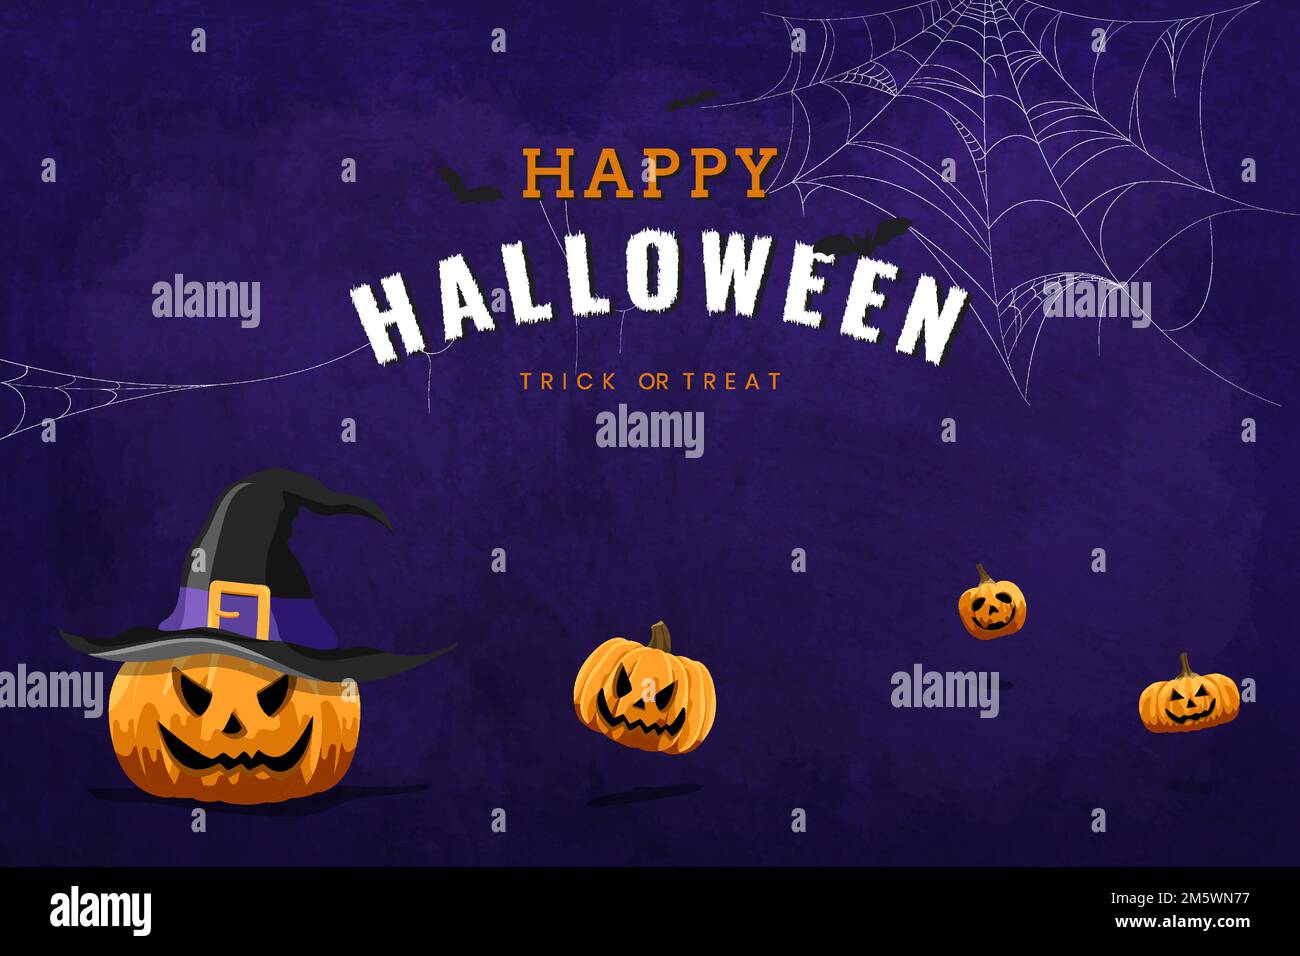 Happy Halloween Jack O'Lantern elements on purple background vector Stock Vector